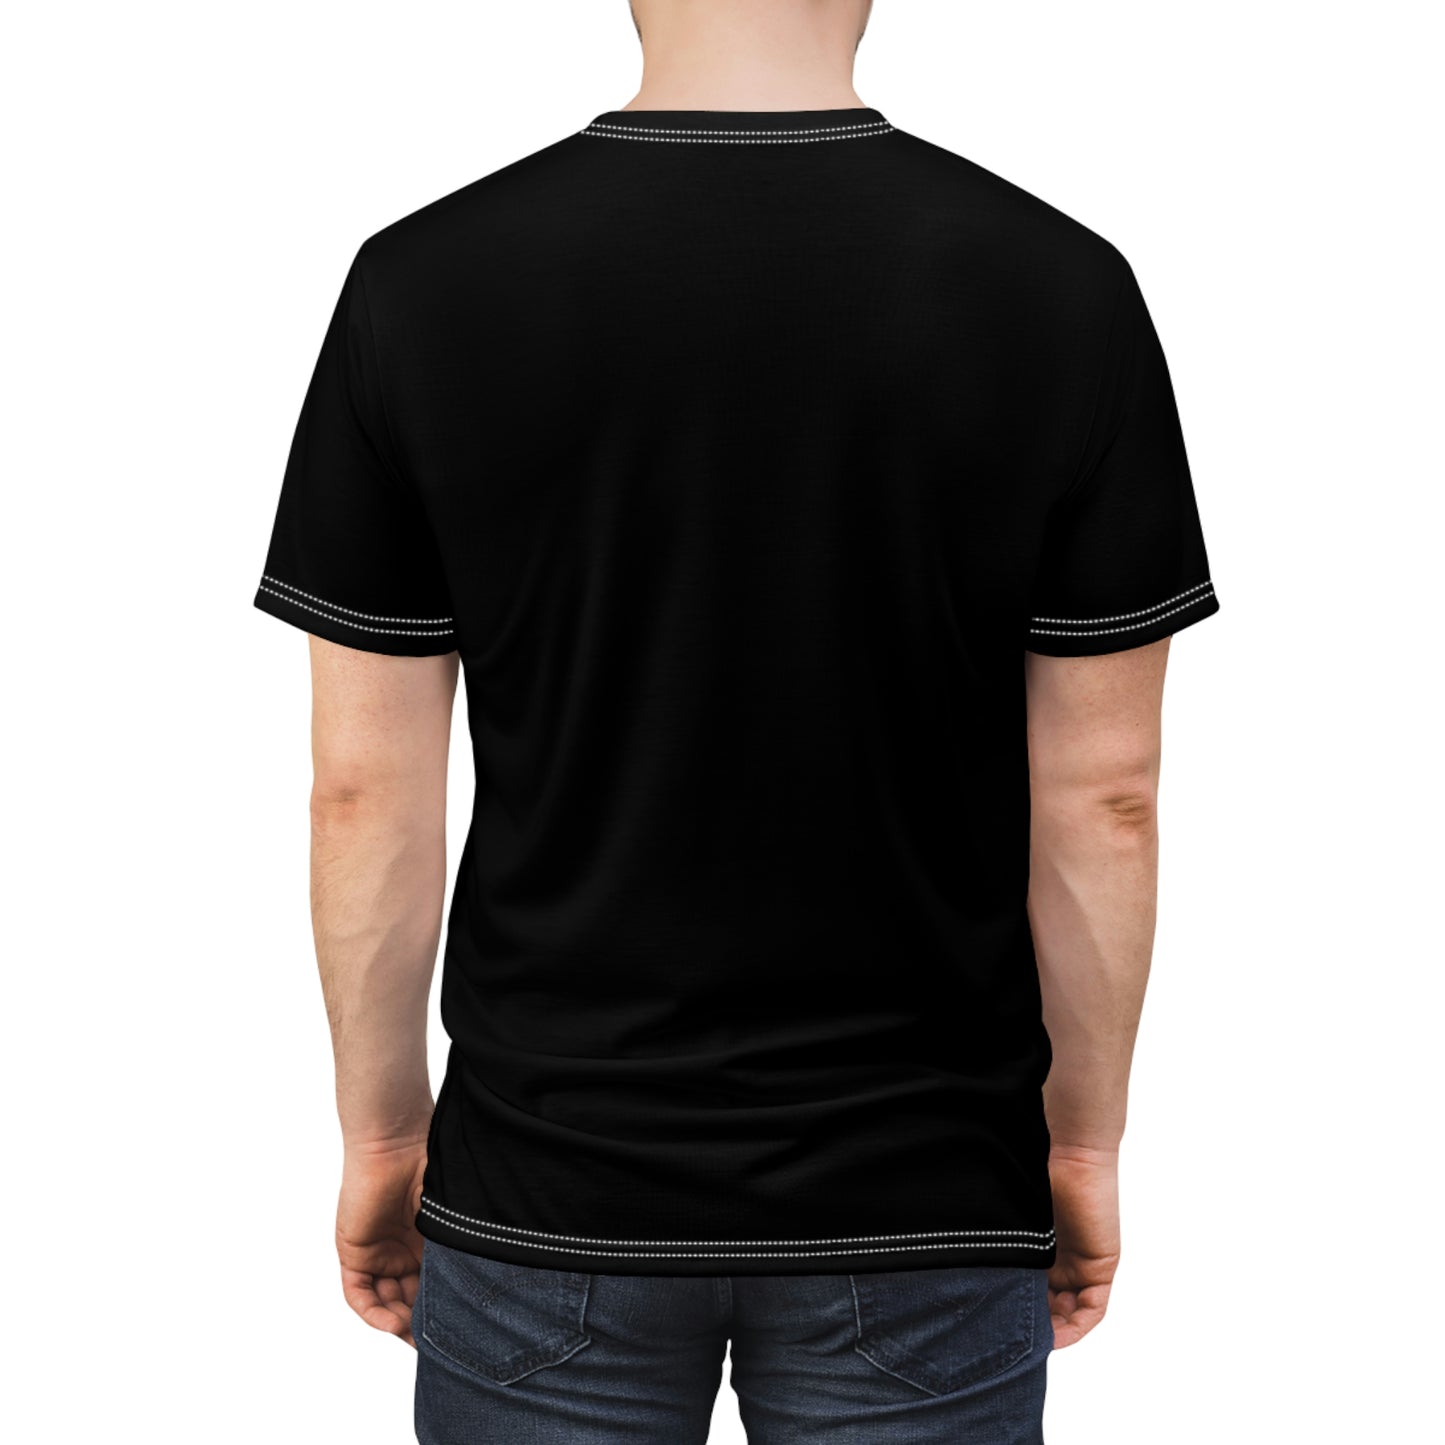 A Single Breath - Unisex All-Over Print Cut & Sew T-Shirt